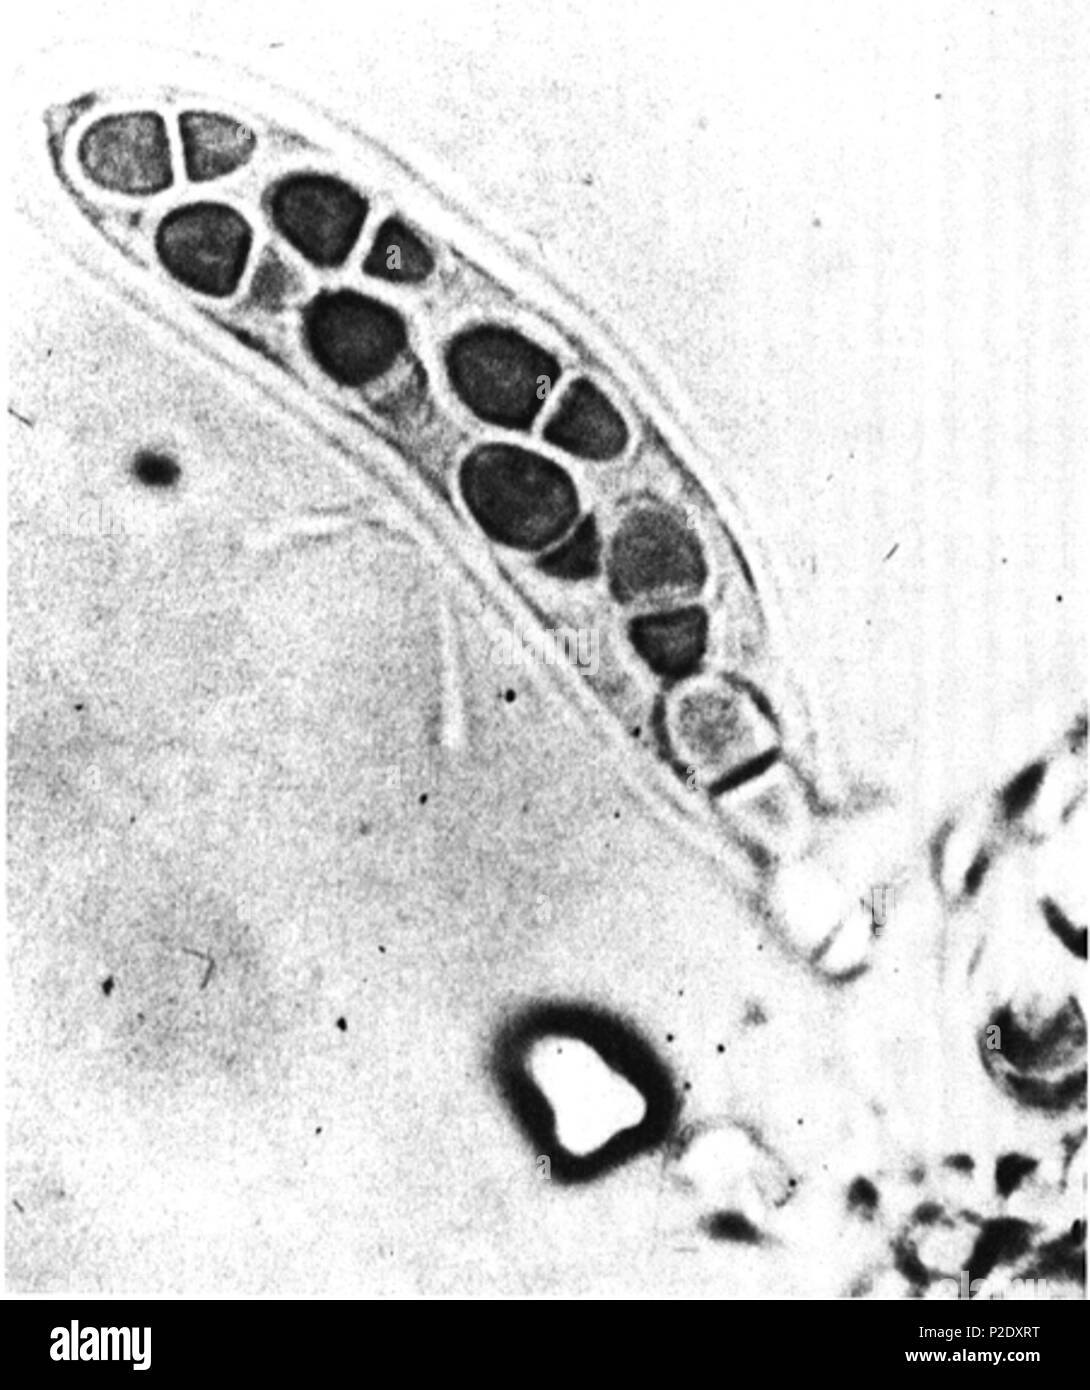 7 Bitunicate ascus and ascospores of Didymella rabiei Stock Photo